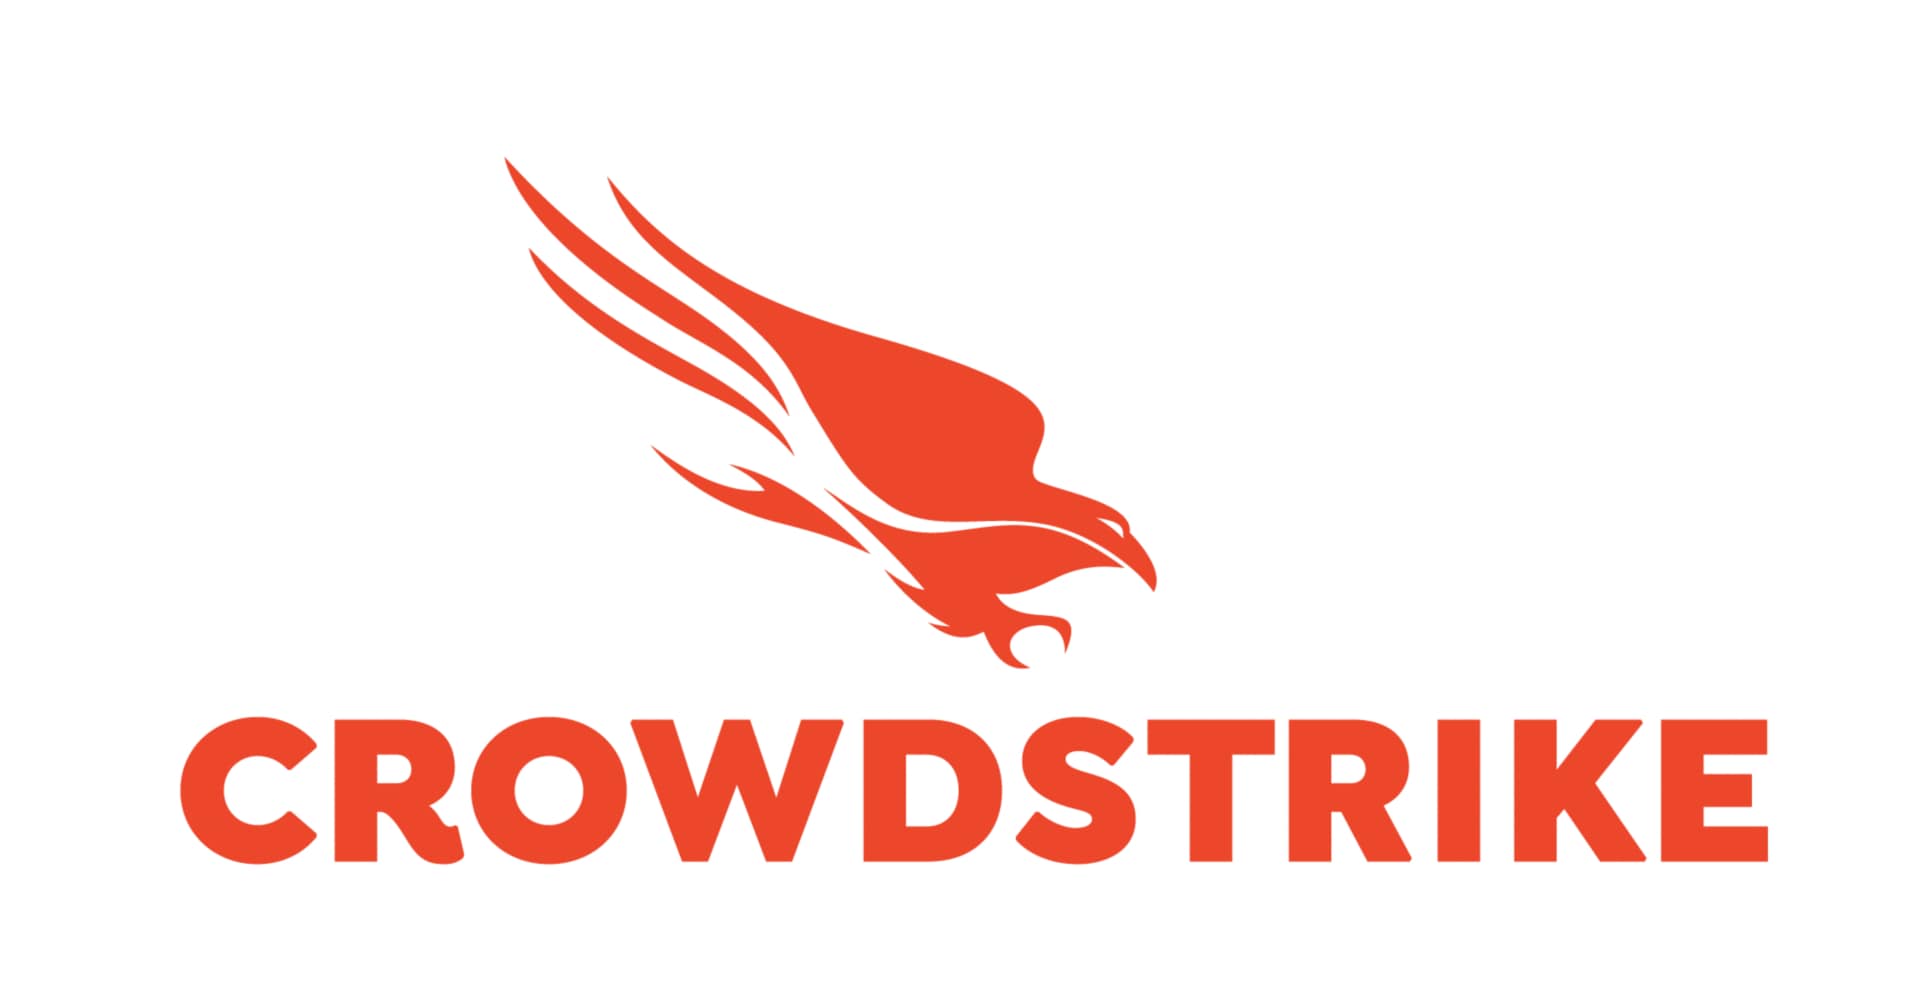 CrowdStrike 12-Month Falcon Firewall Management Bundle Promo Software Subscription (1,500-1,999 Licenses)